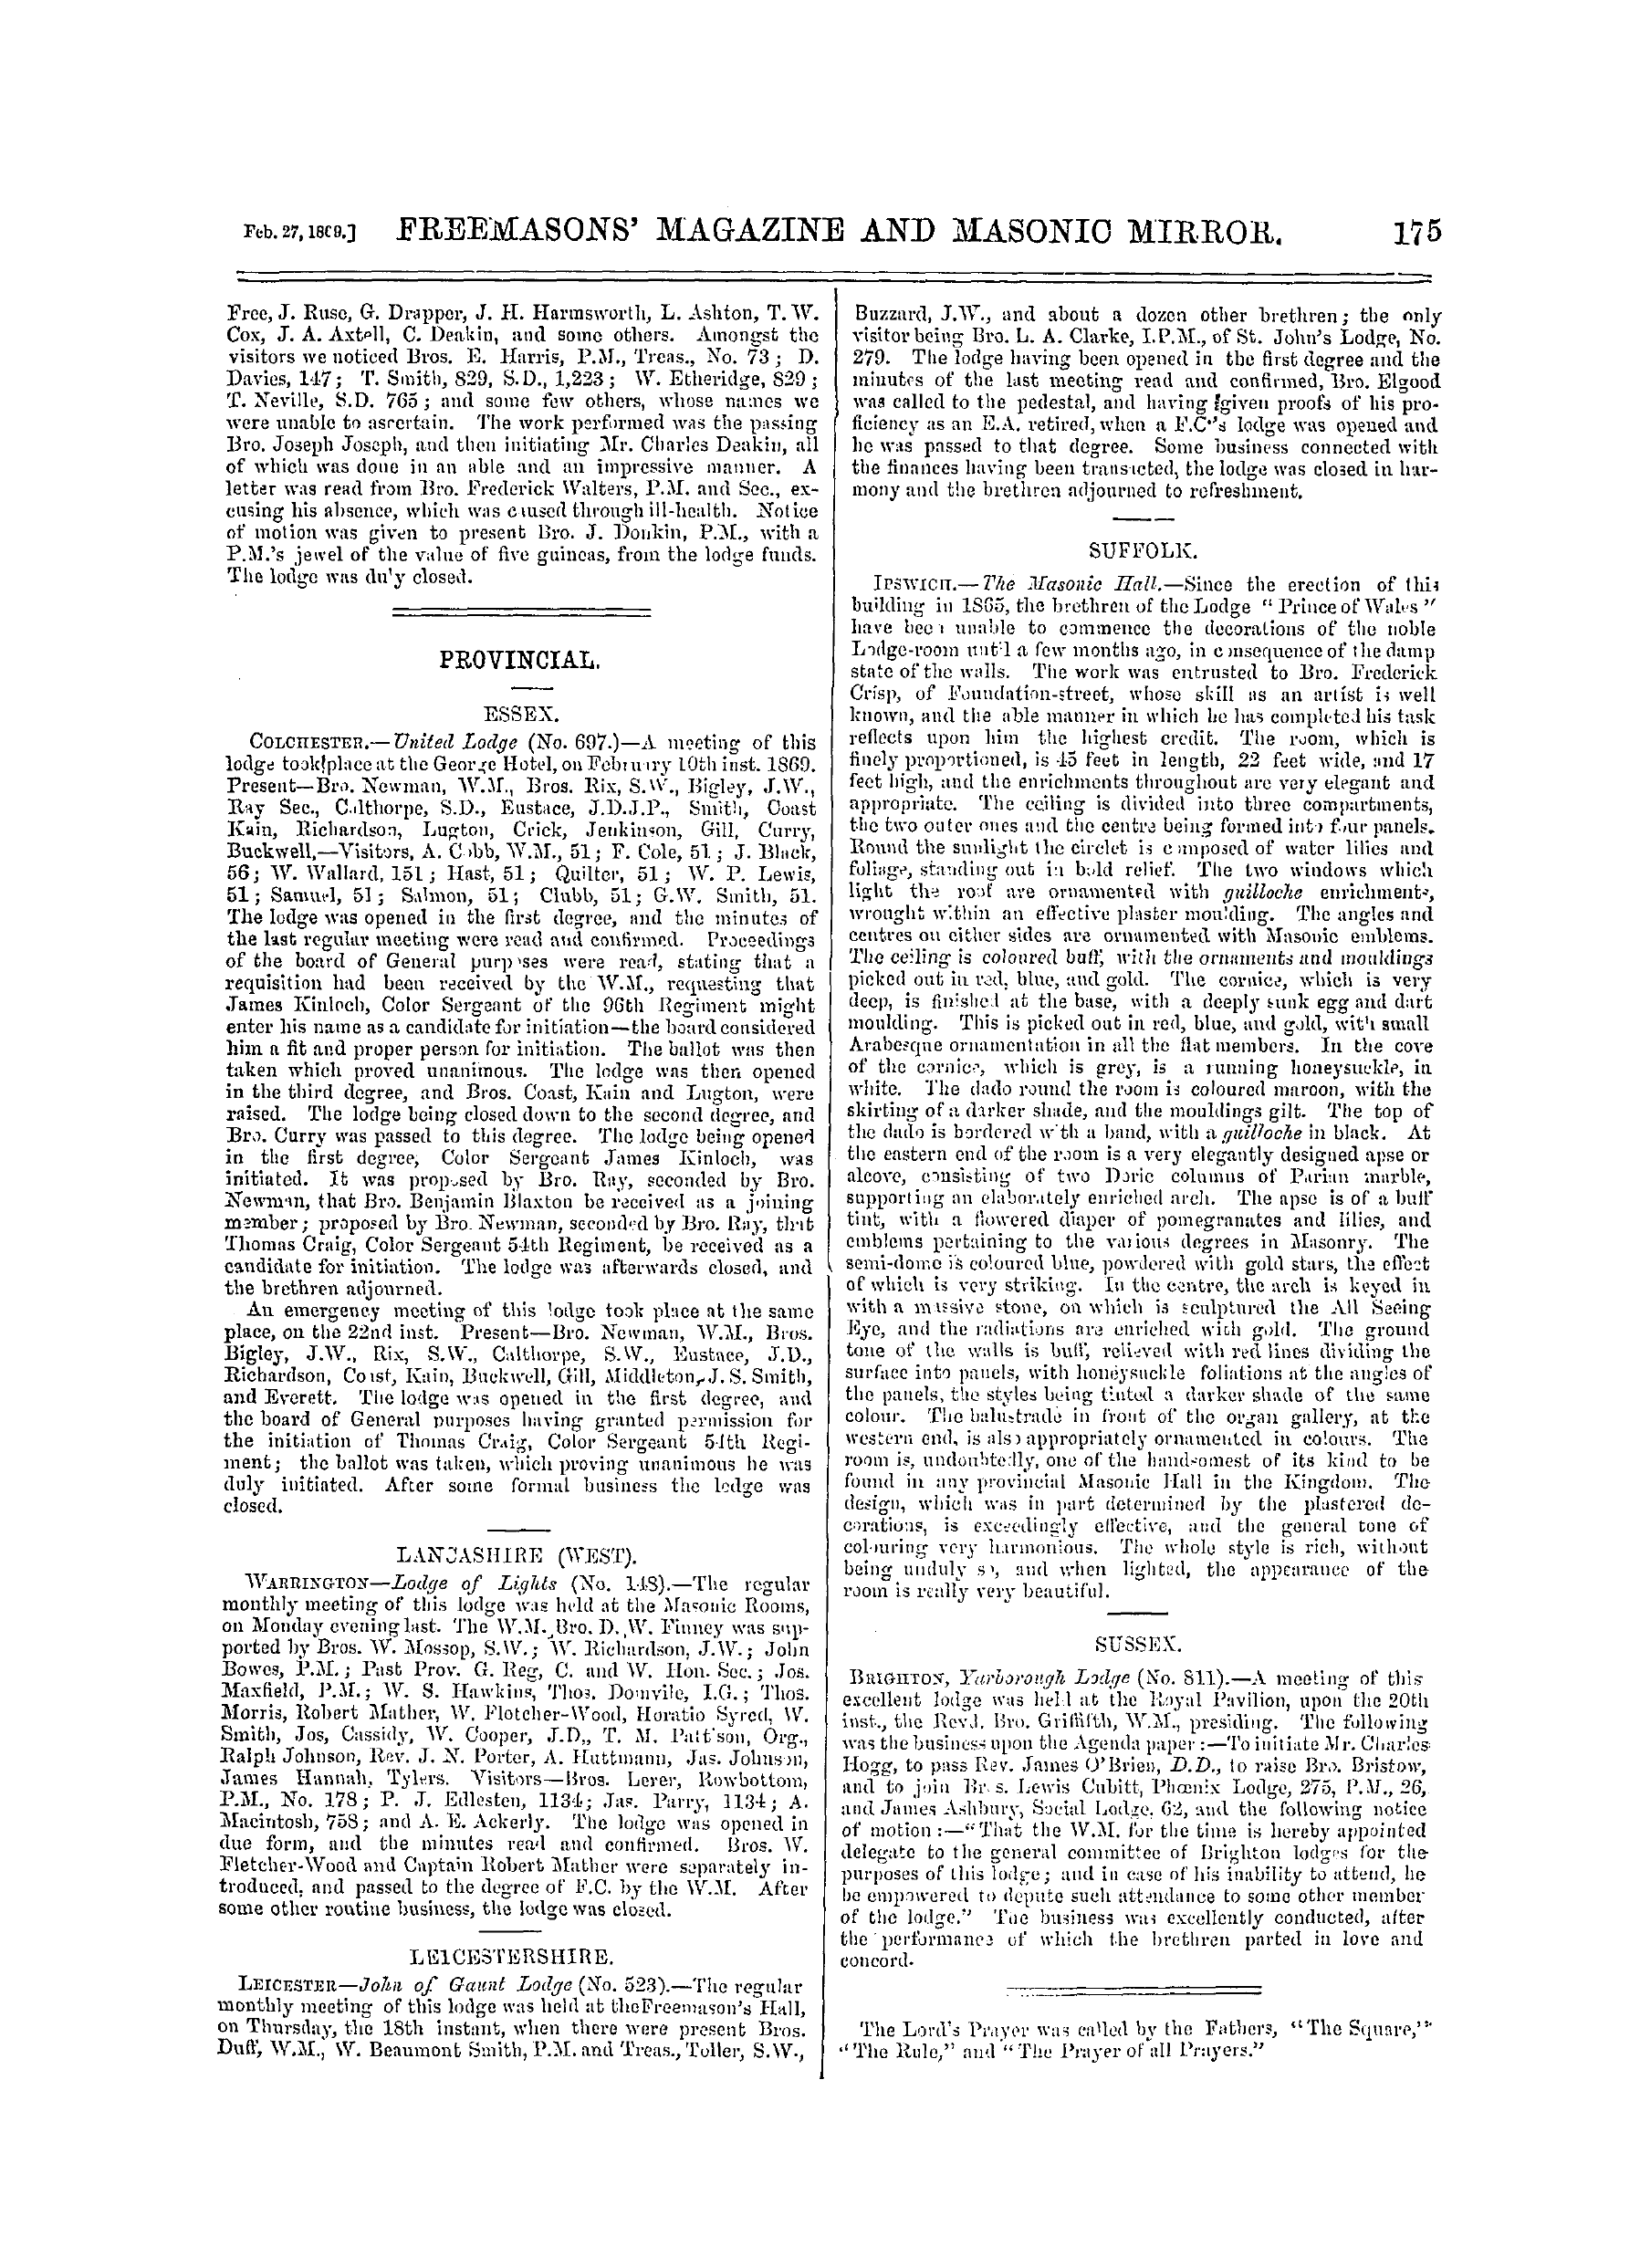 The Freemasons' Monthly Magazine: 1869-02-27 - Metropolitan.